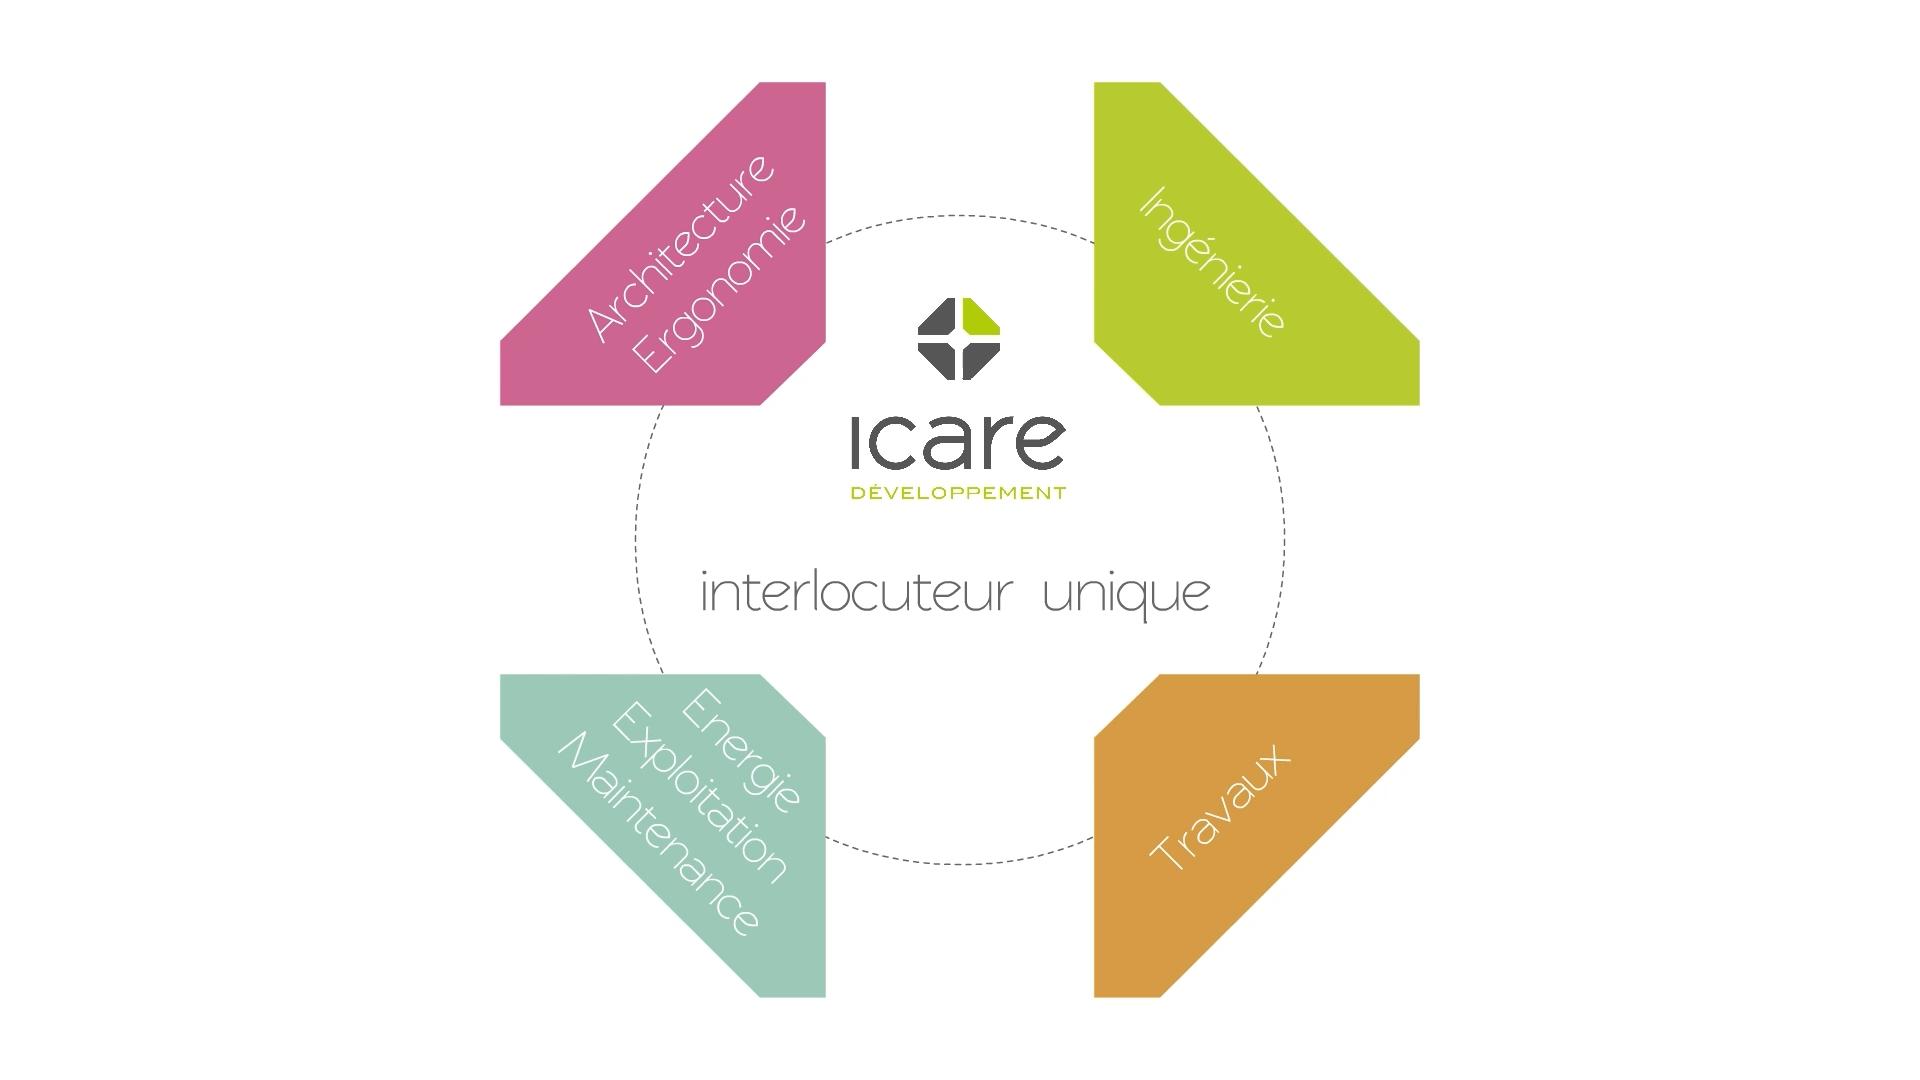 Icare-developpement-presentation-5